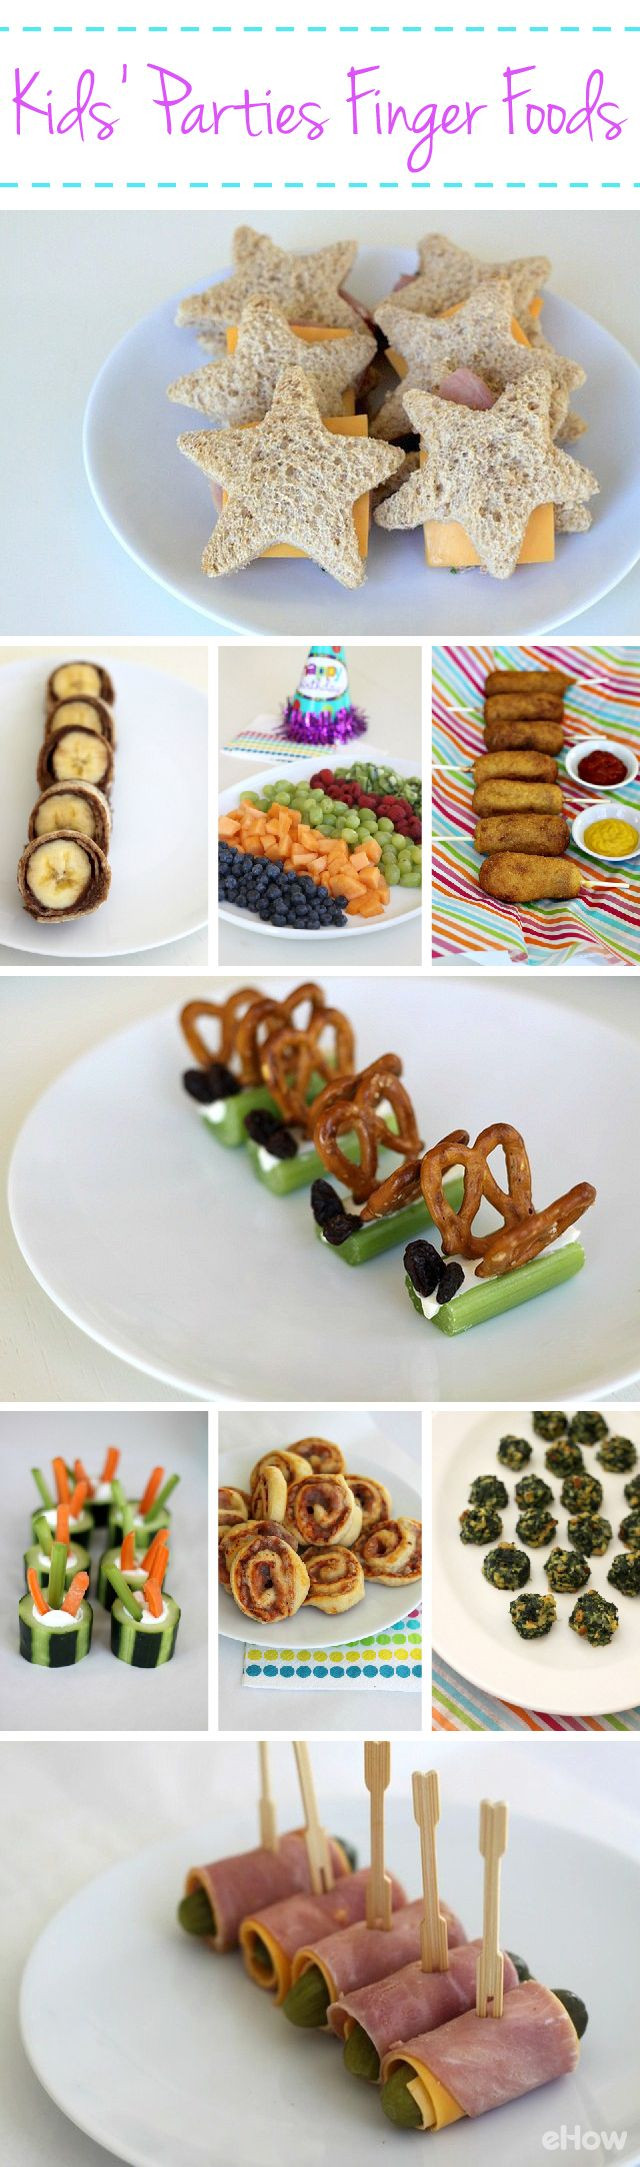 Easy Finger Foods For Kids Party
 9 Finger Foods for Kids Parties